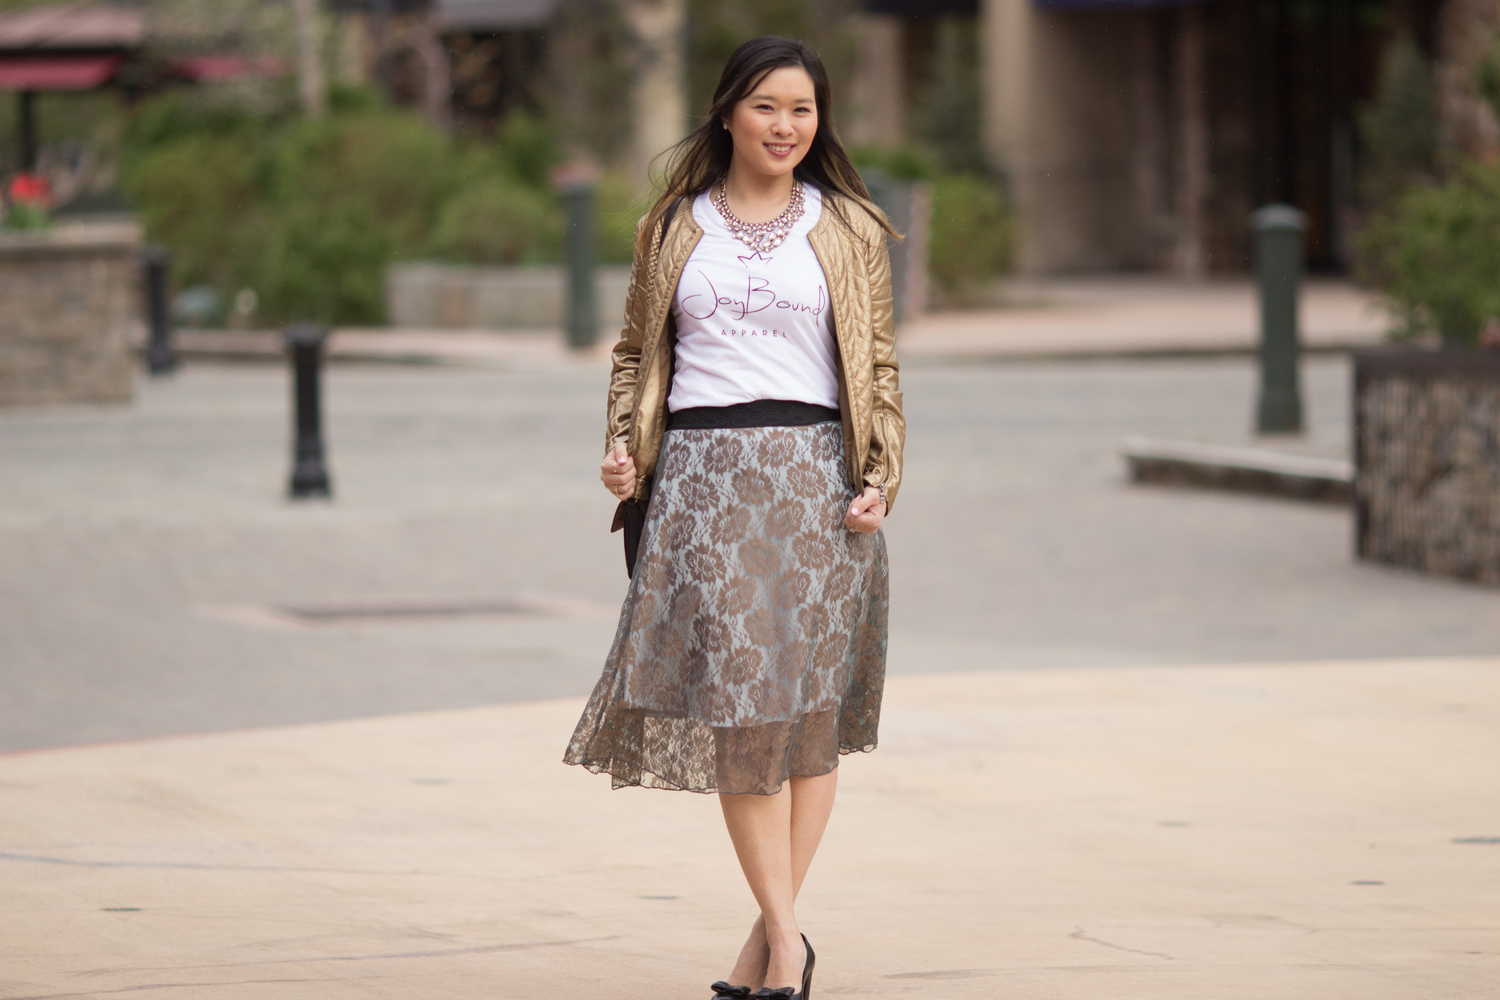 Sandy a la Mode | Fashion Blogger 5 Tips For Spreading Joy On Blogs / Social Media!